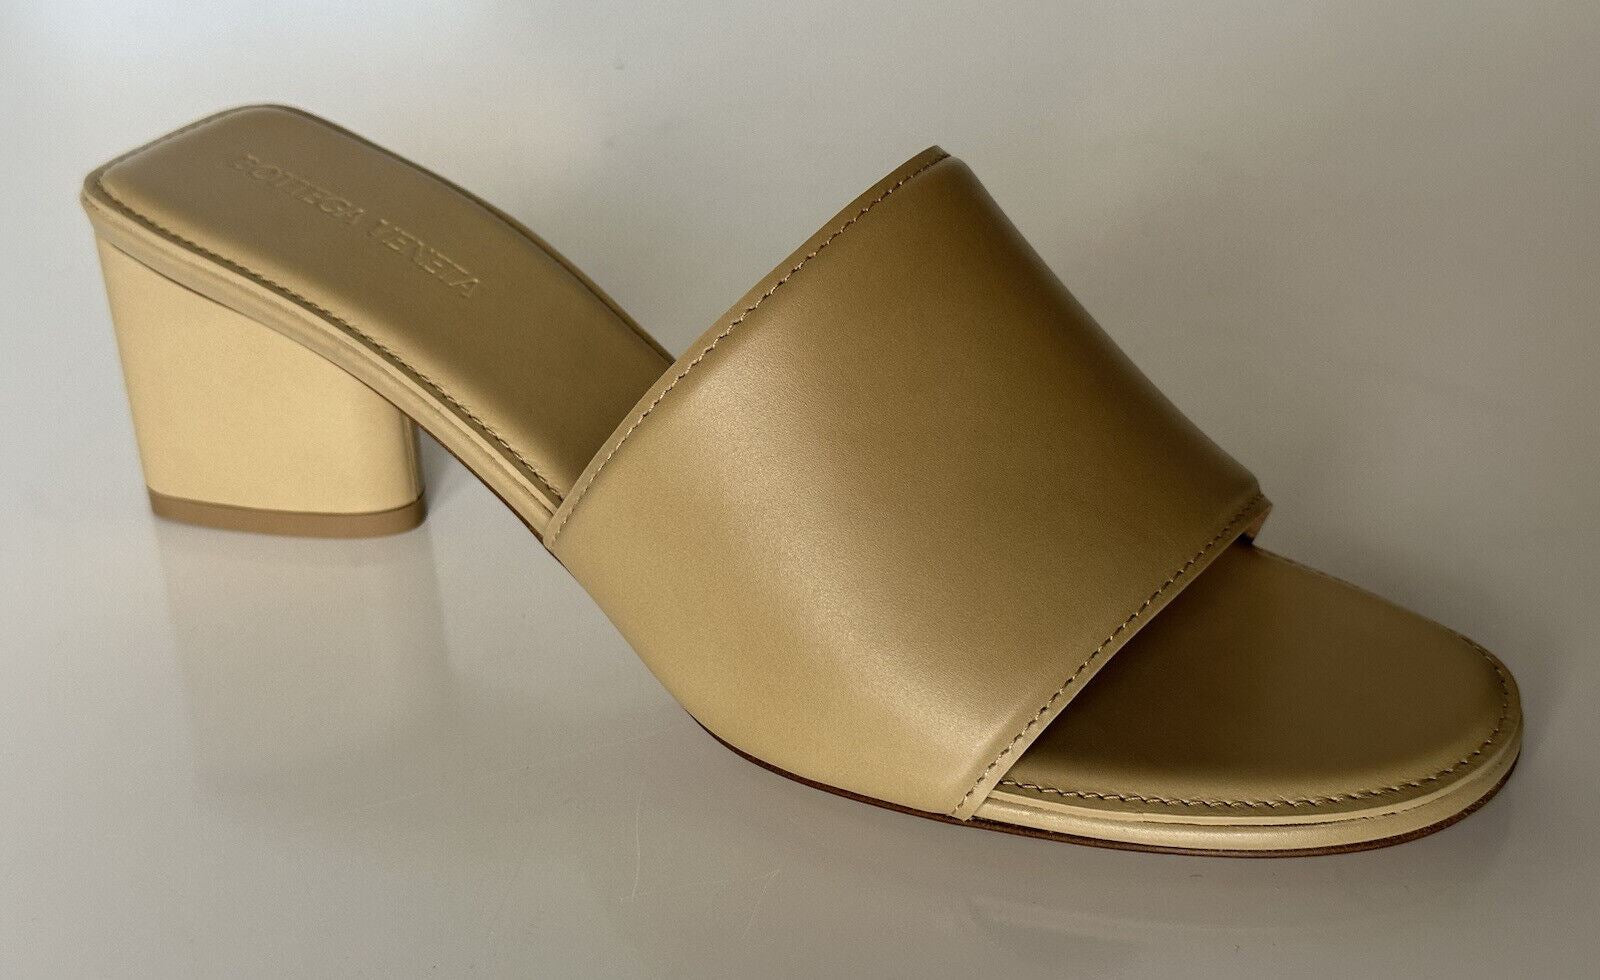 NIB $760 Bottega Veneta Calf Leather Sandals Shoes Cane Sugar 9.5 US 651378 IT